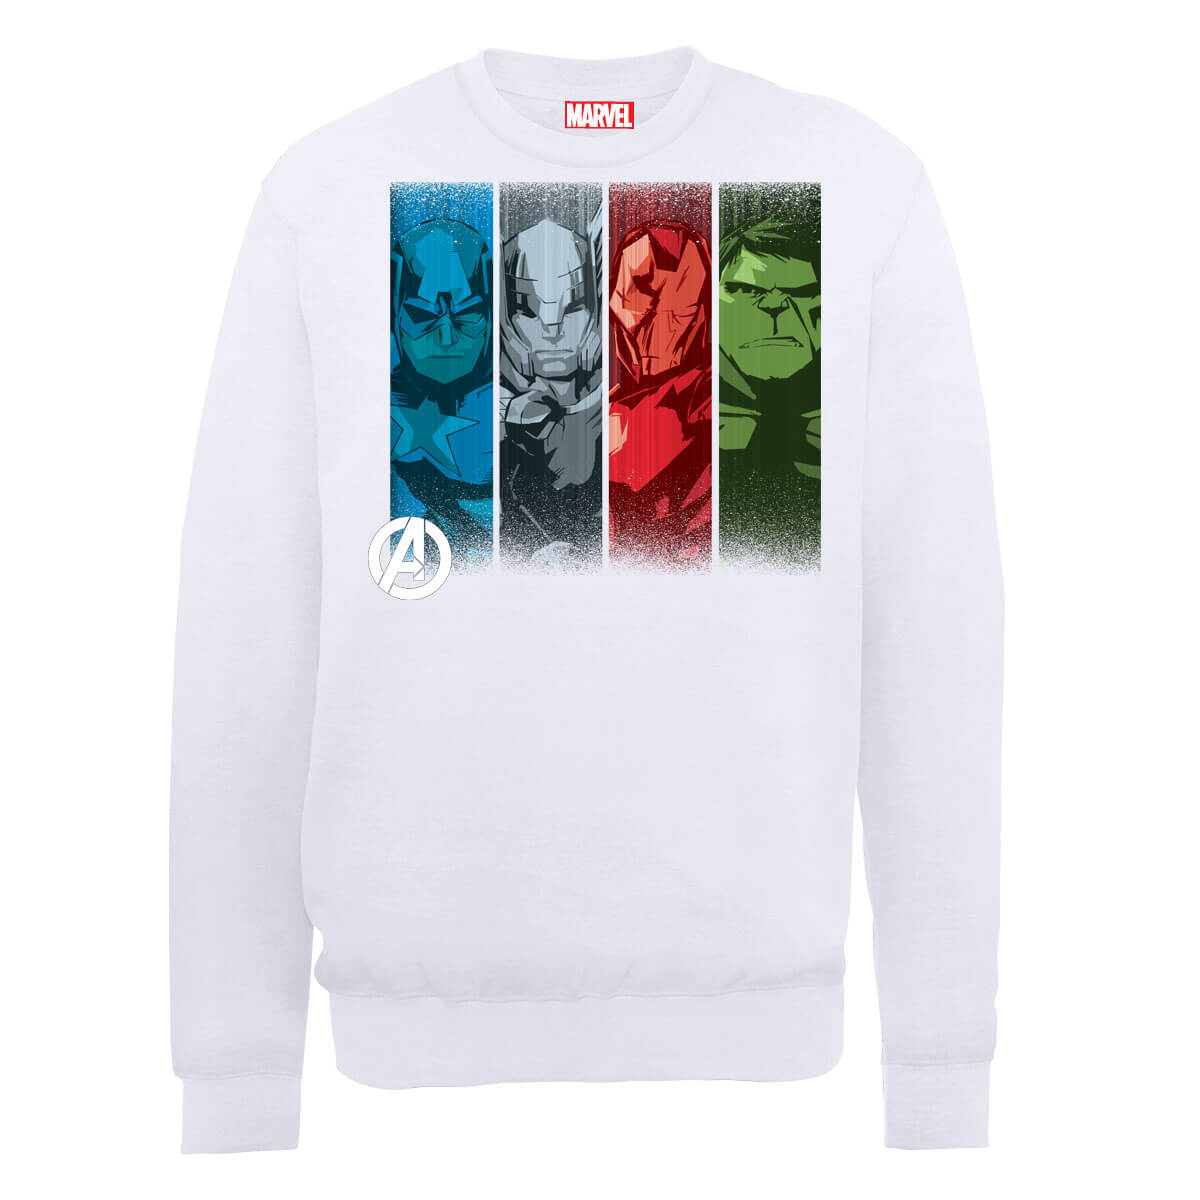 Marvel Avengers Assemble Team Poses Sweatshirt - White - XL - Weiß